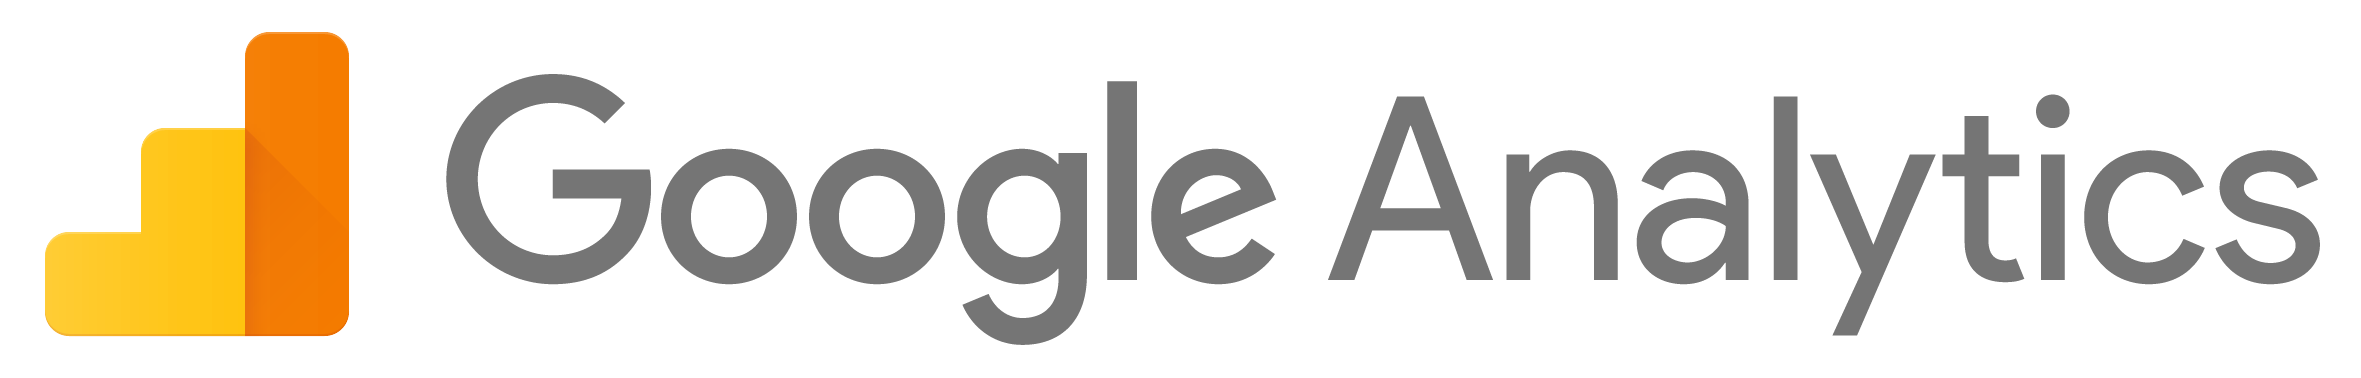 Google Analytics Logo 2